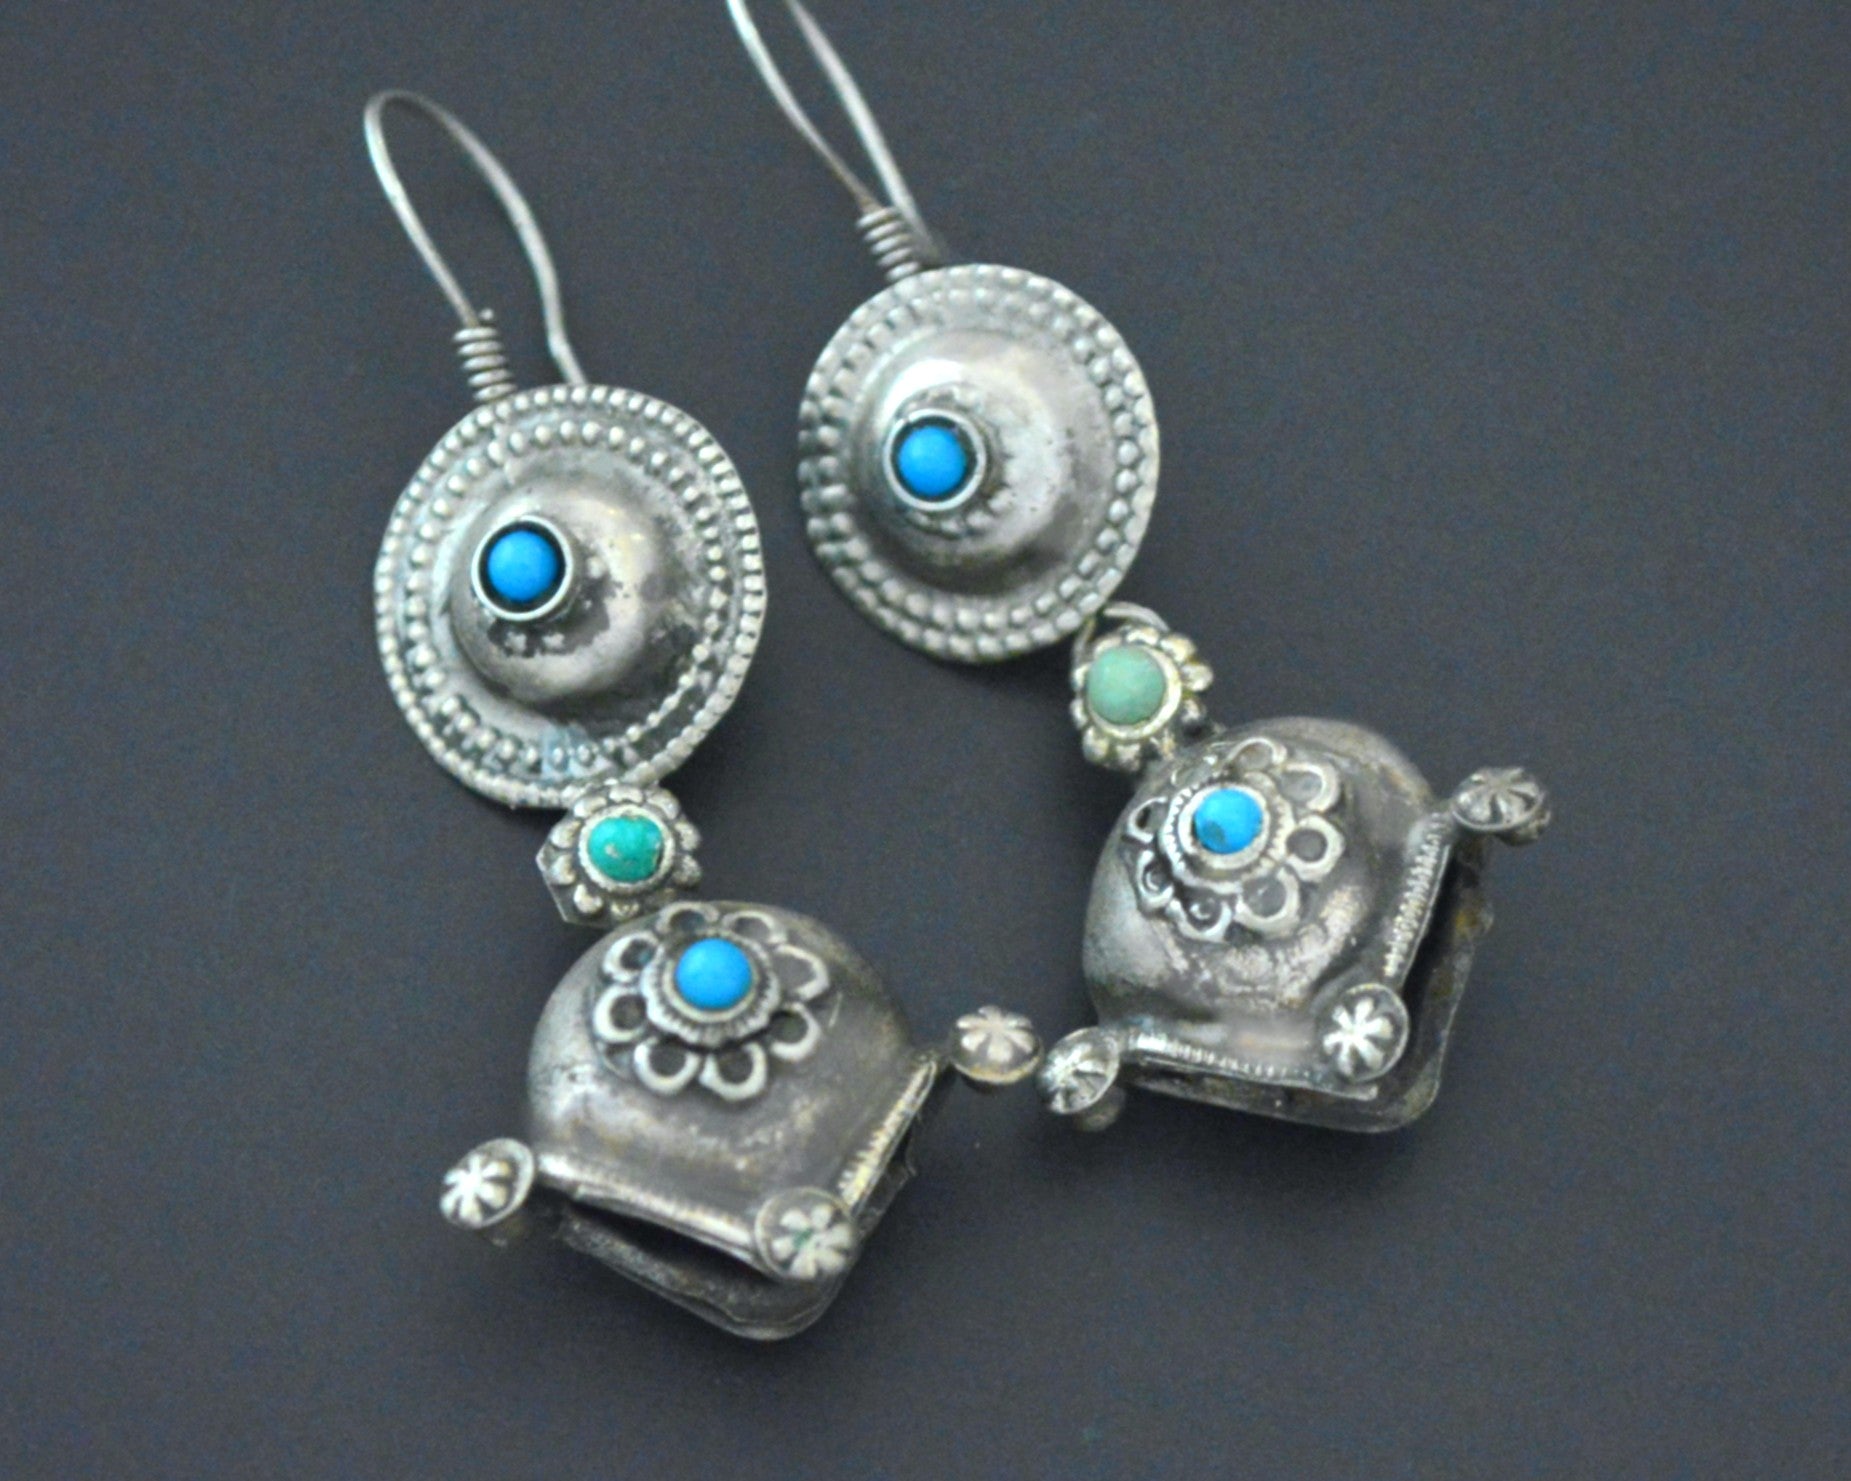 Afghani Dangle Earrings with Turquoise